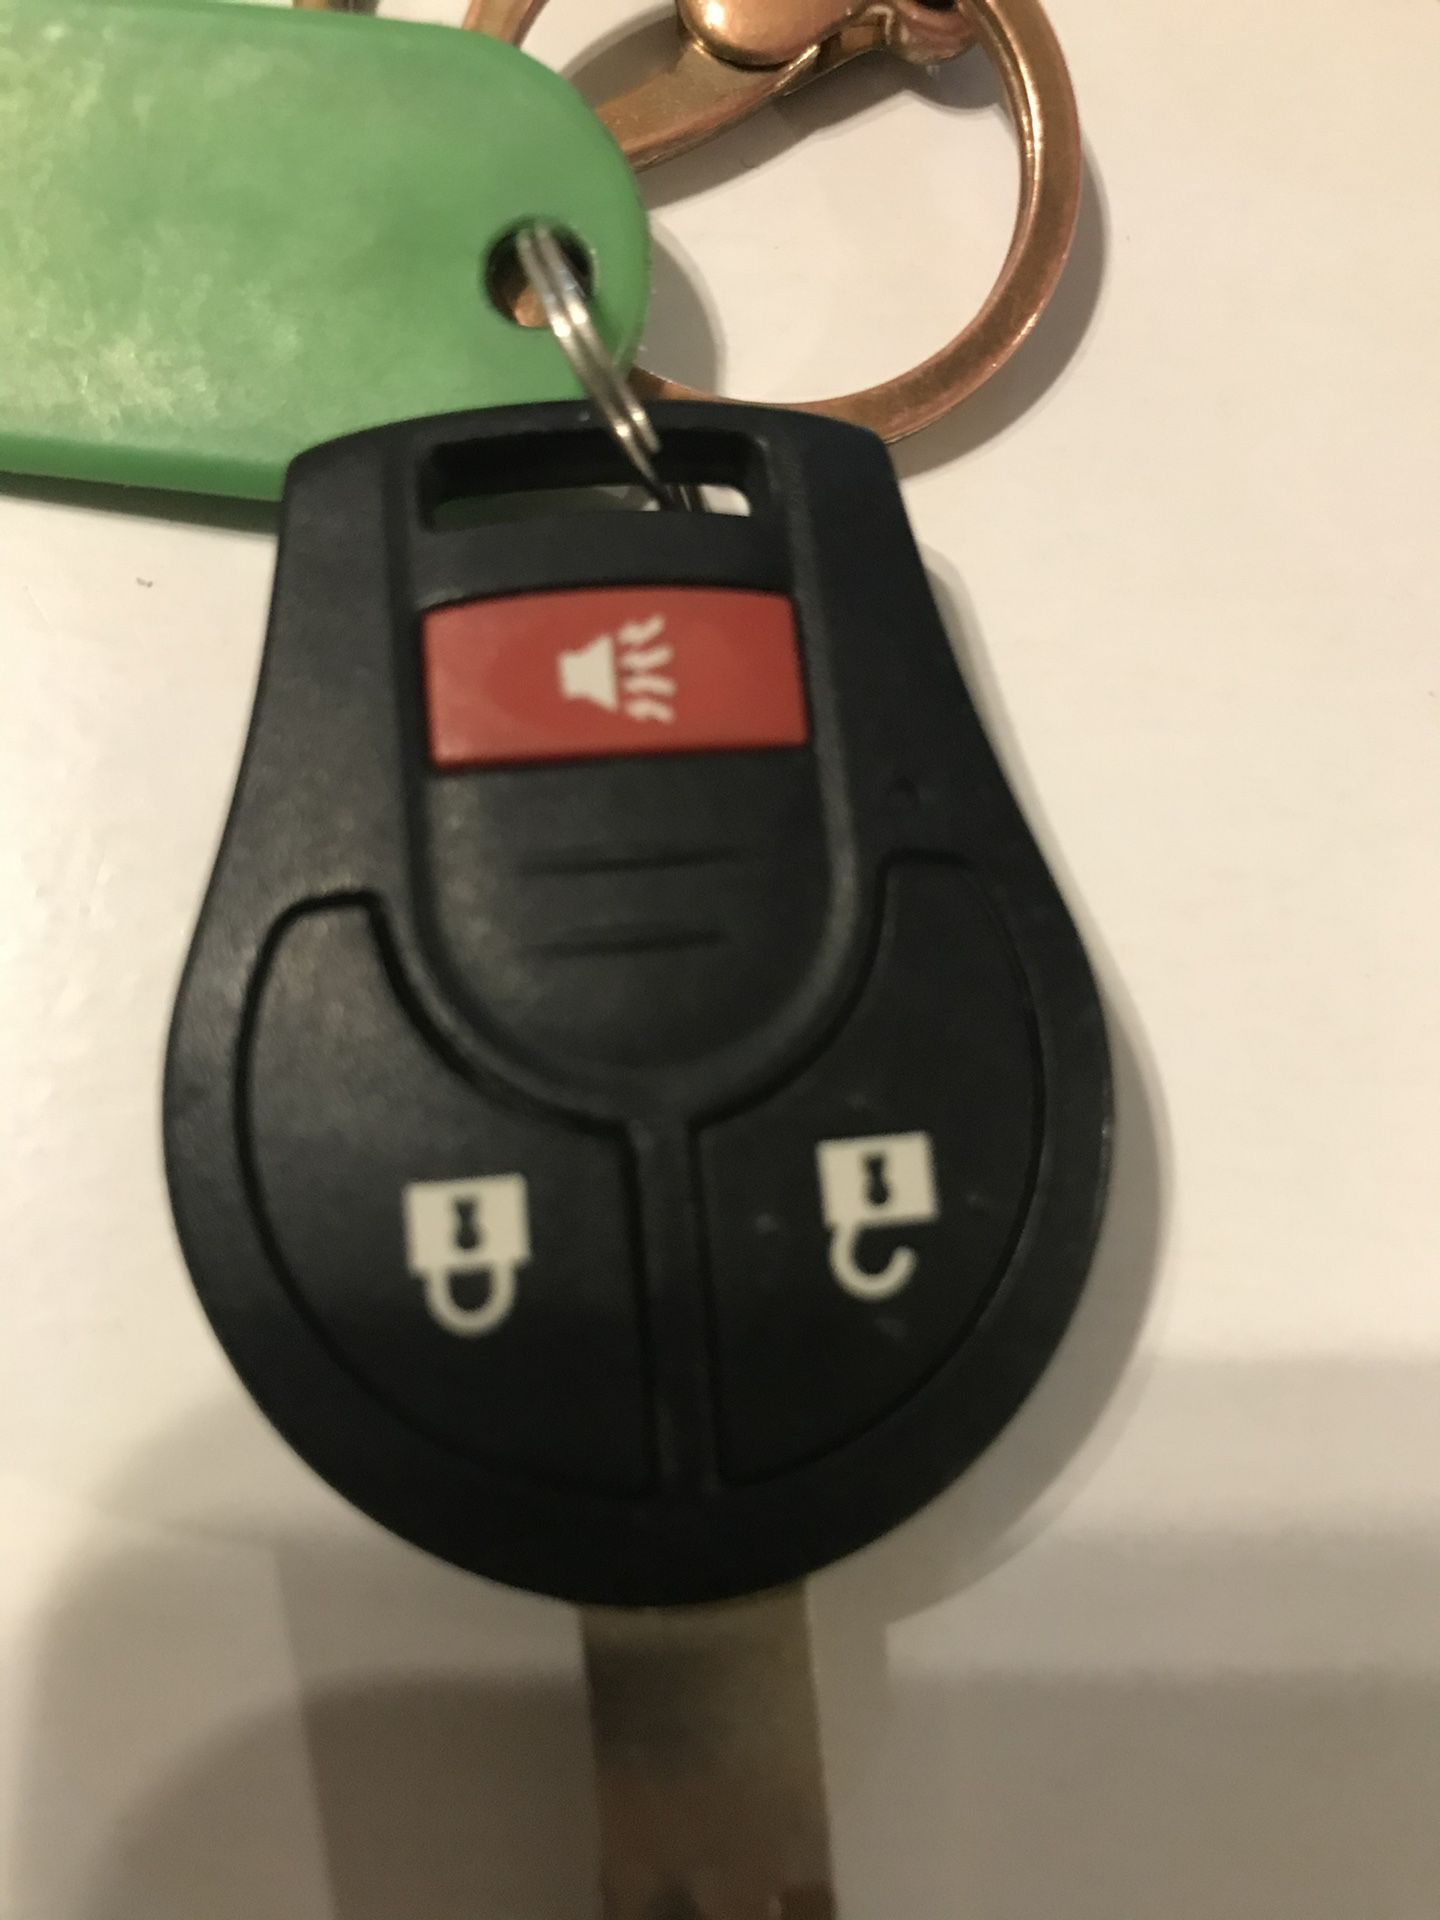 Remote,Key Copy’s,Auto,Commercial Locksmith 